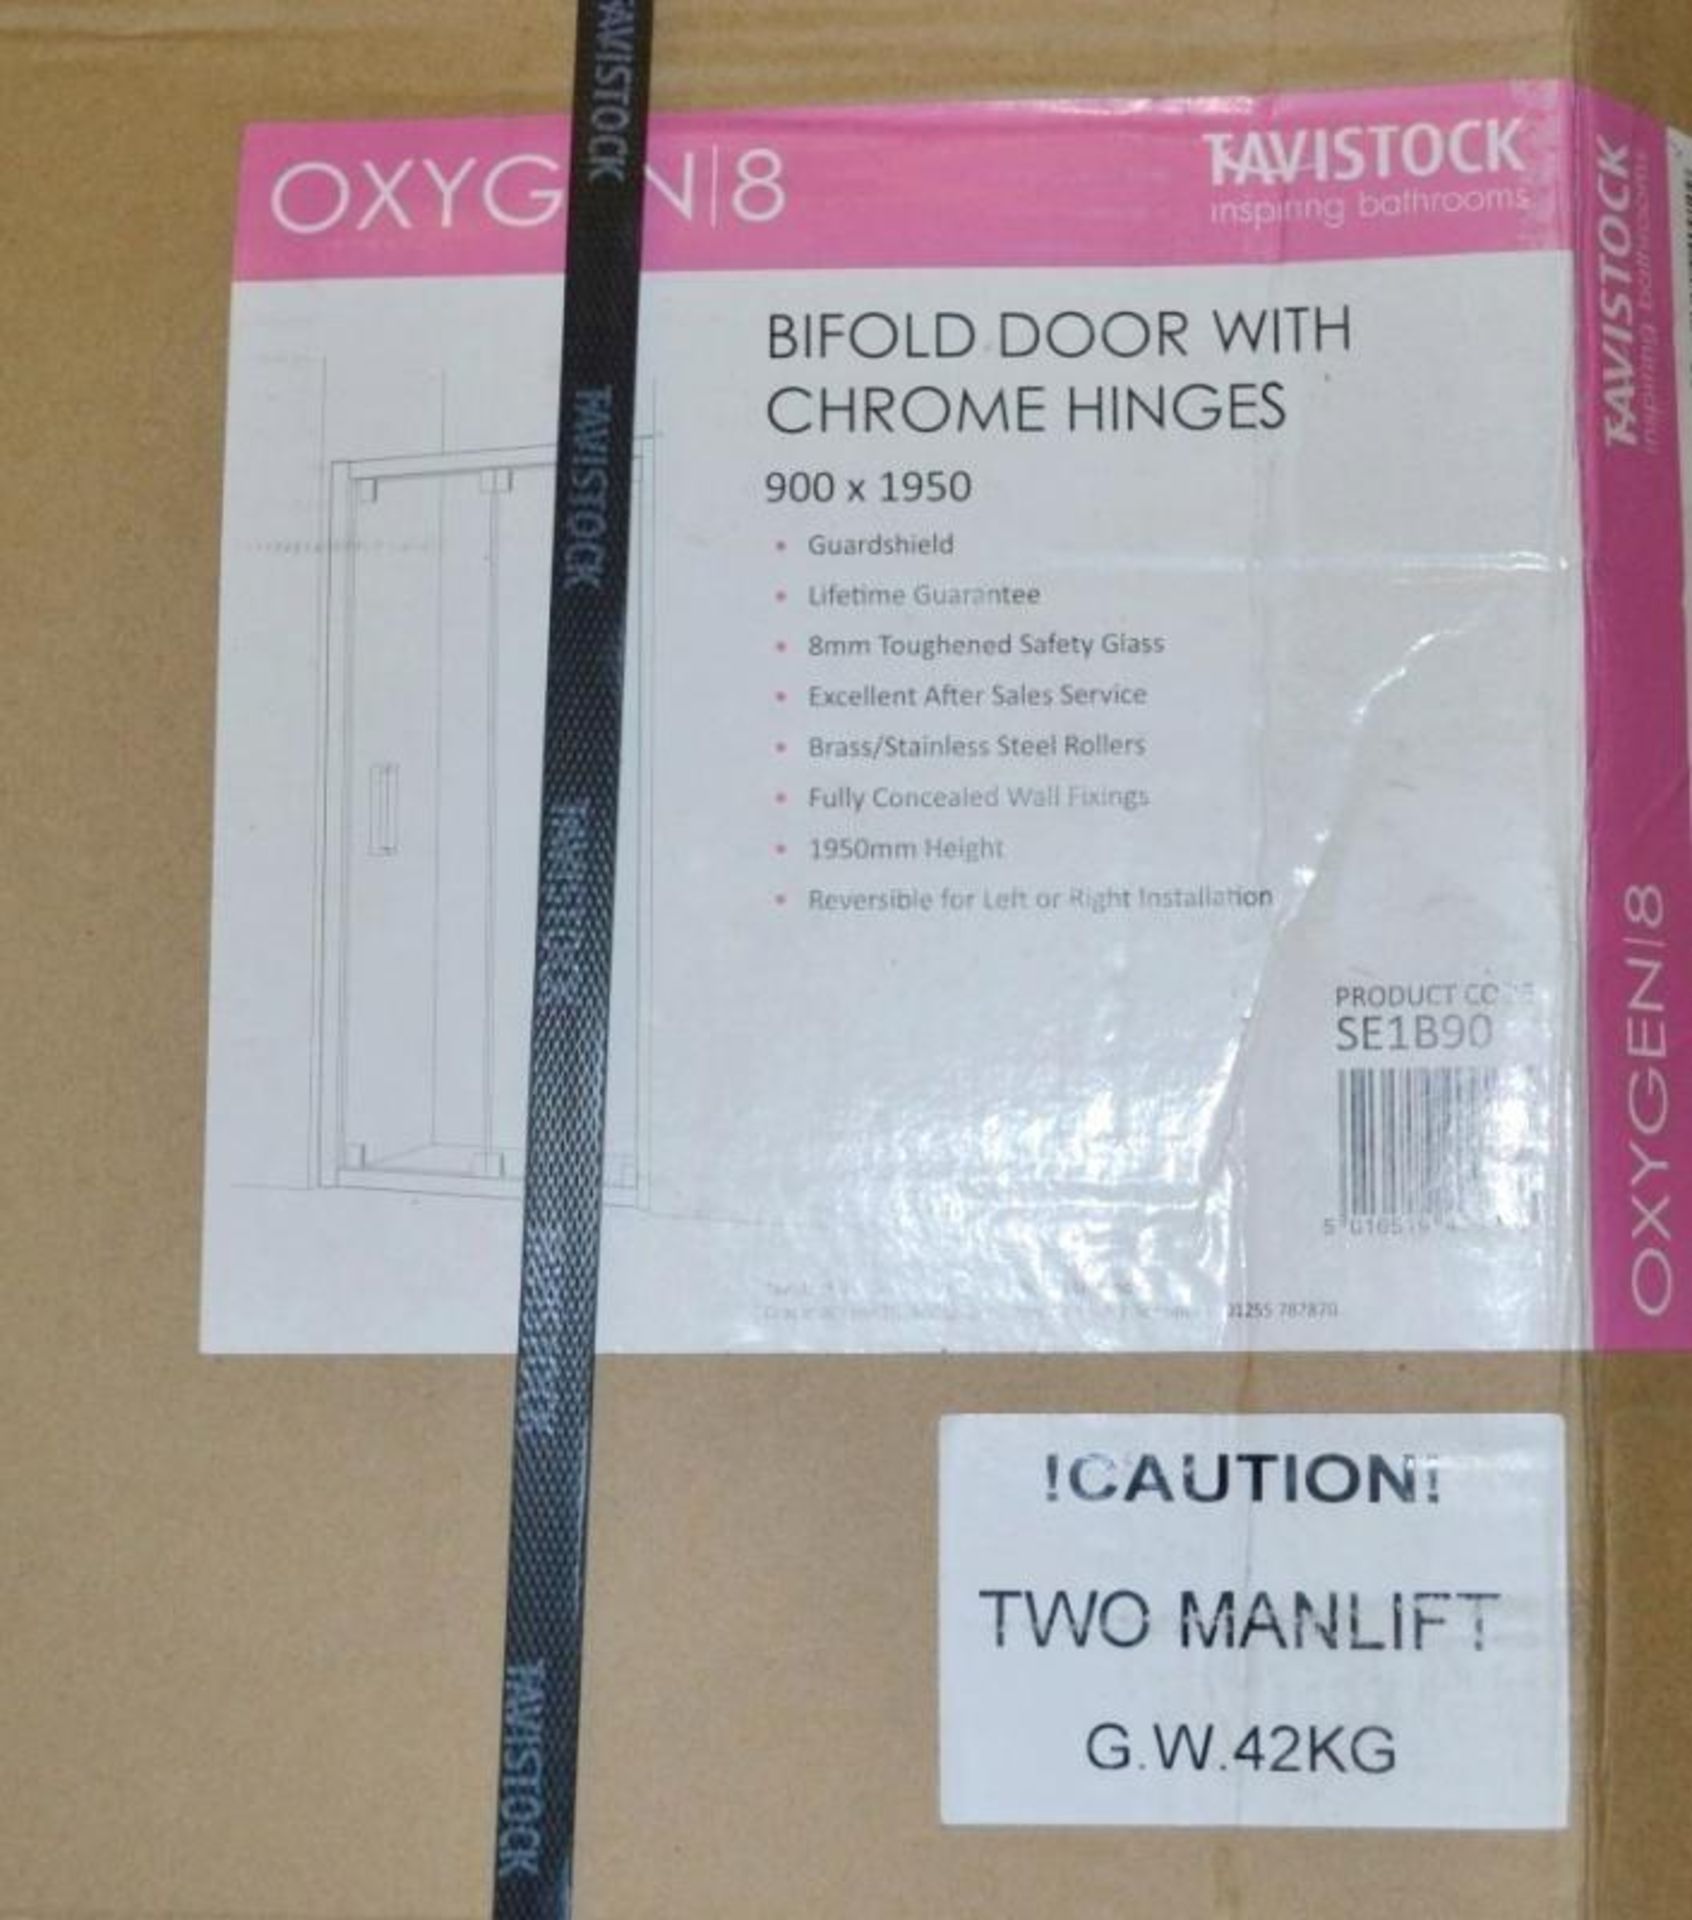 1 x Tavistock Oxygen8 8mm 900mm Bifold Door With Chrome Hinges - SE1B90 - 900x1950mm - New / Sealed